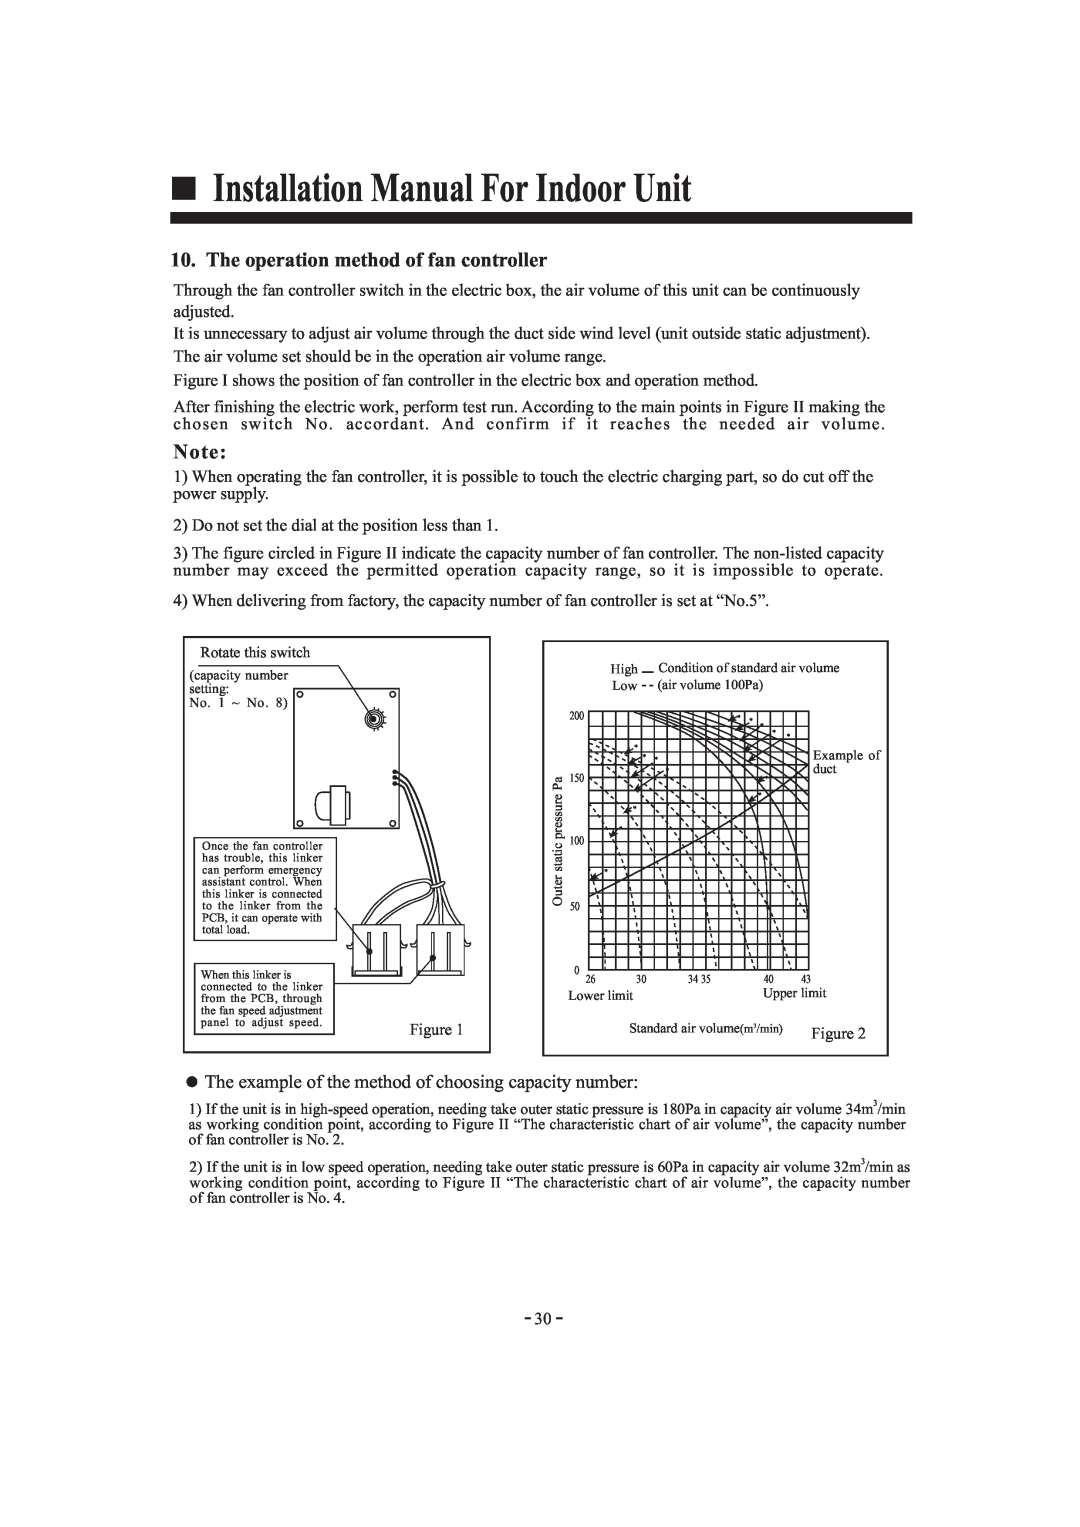 Haier HDU-42HF03/H installation manual The operation method of fan controller, Installation Manual For Indoor Unit 